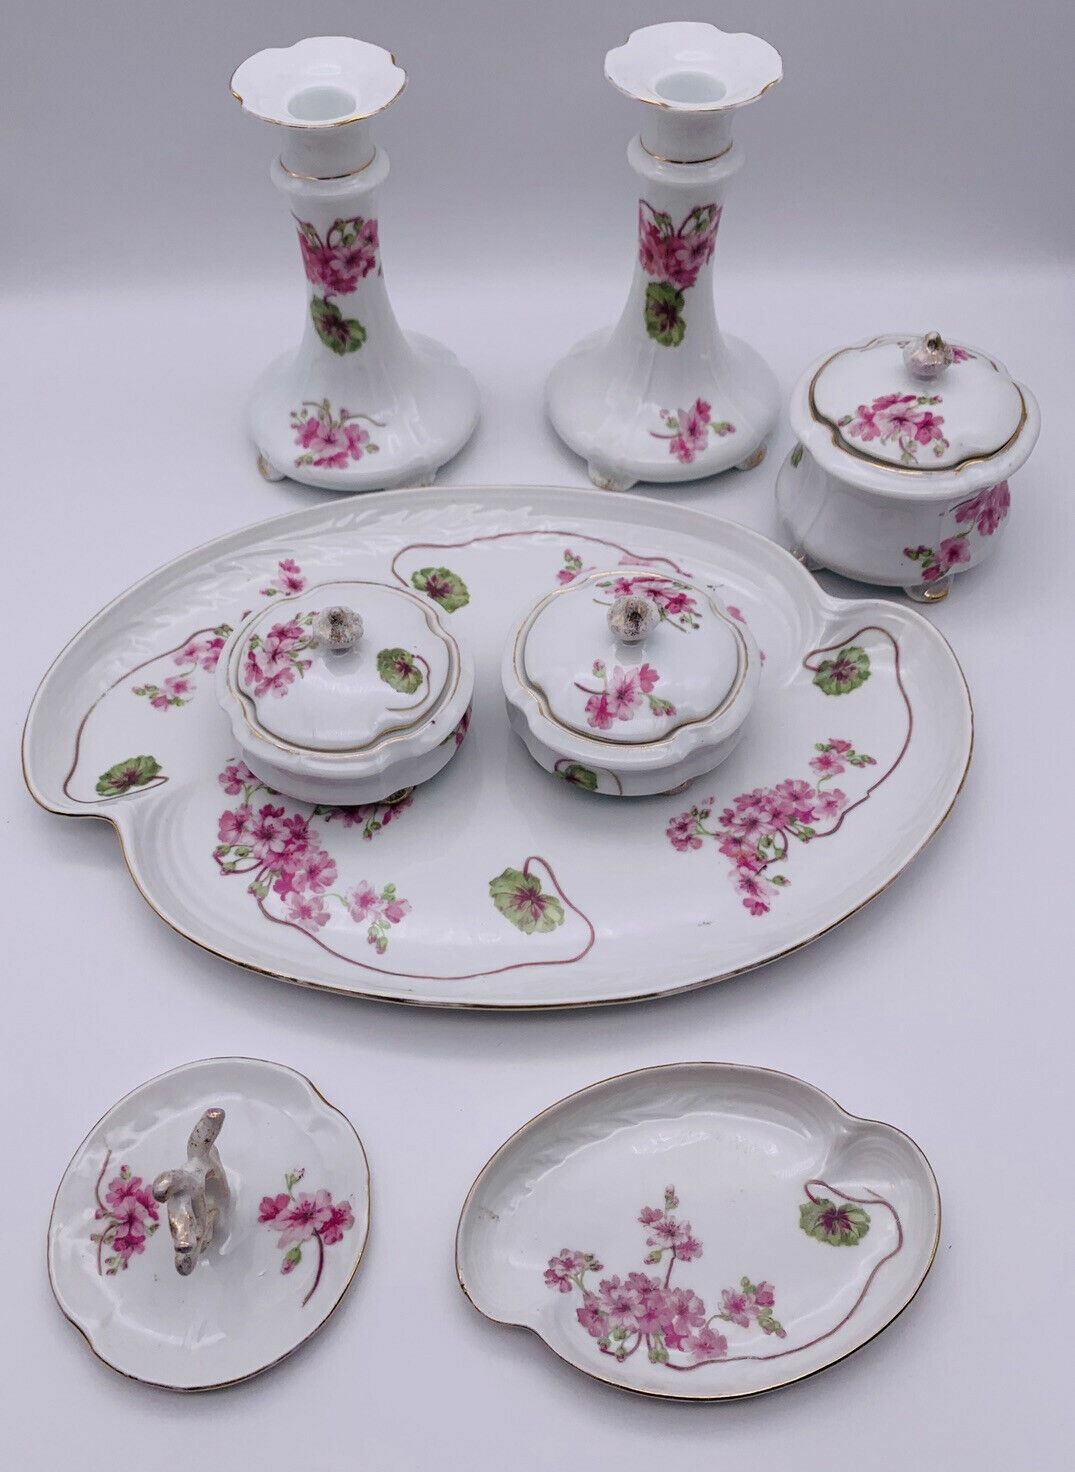 Vintage 11 Piece Porcelain China Vanity Set Pink & Green Floral with Gold Trim